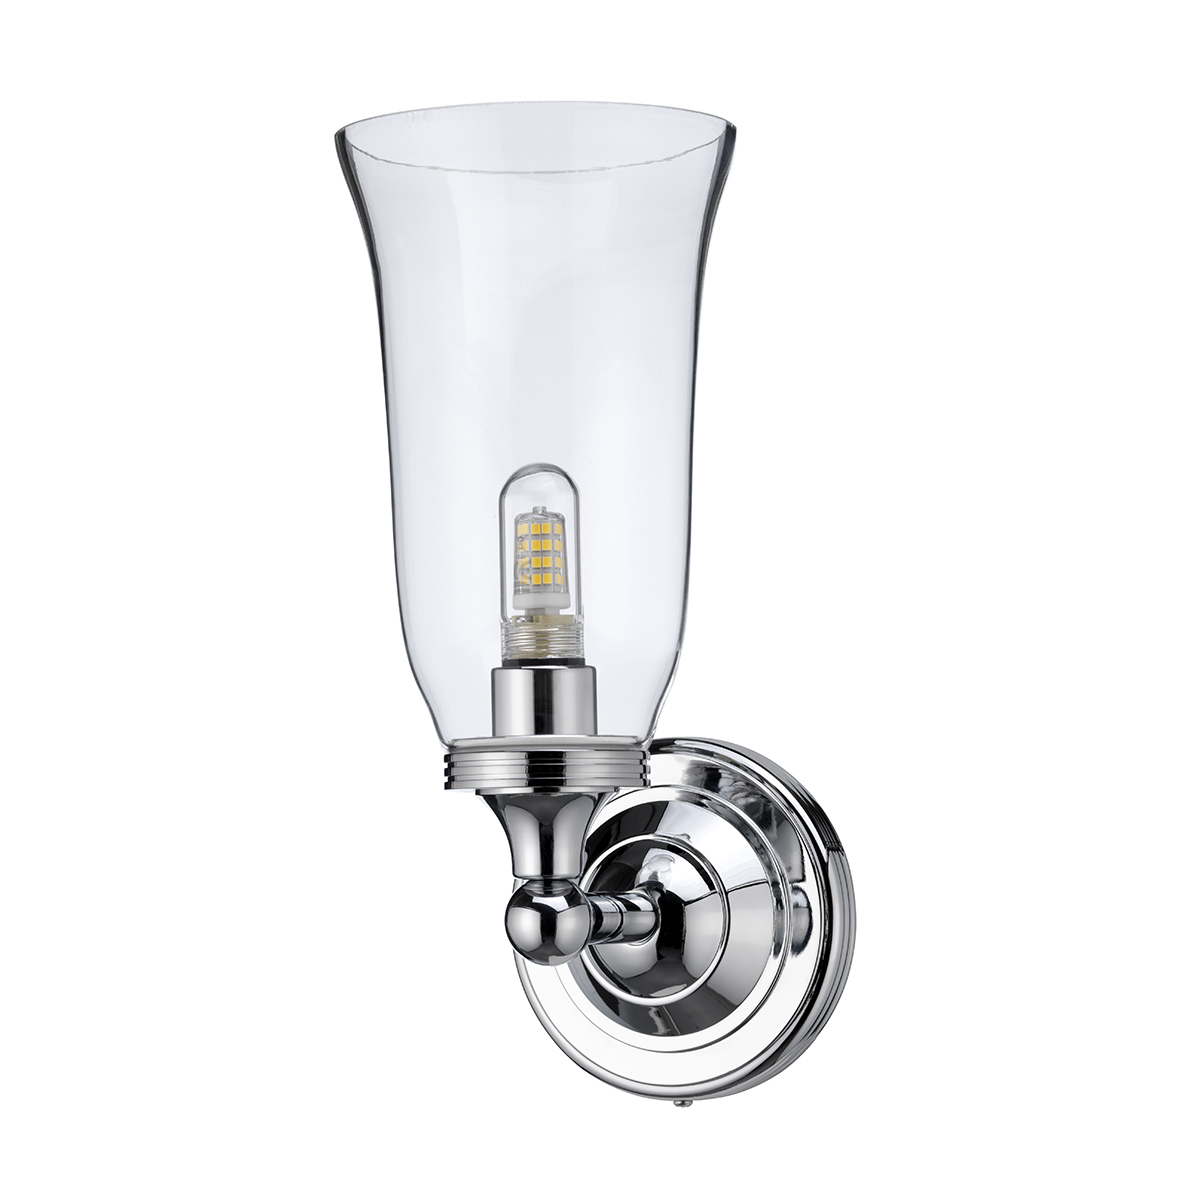 Burlington Round light with chrome base & clear  glass vase shade